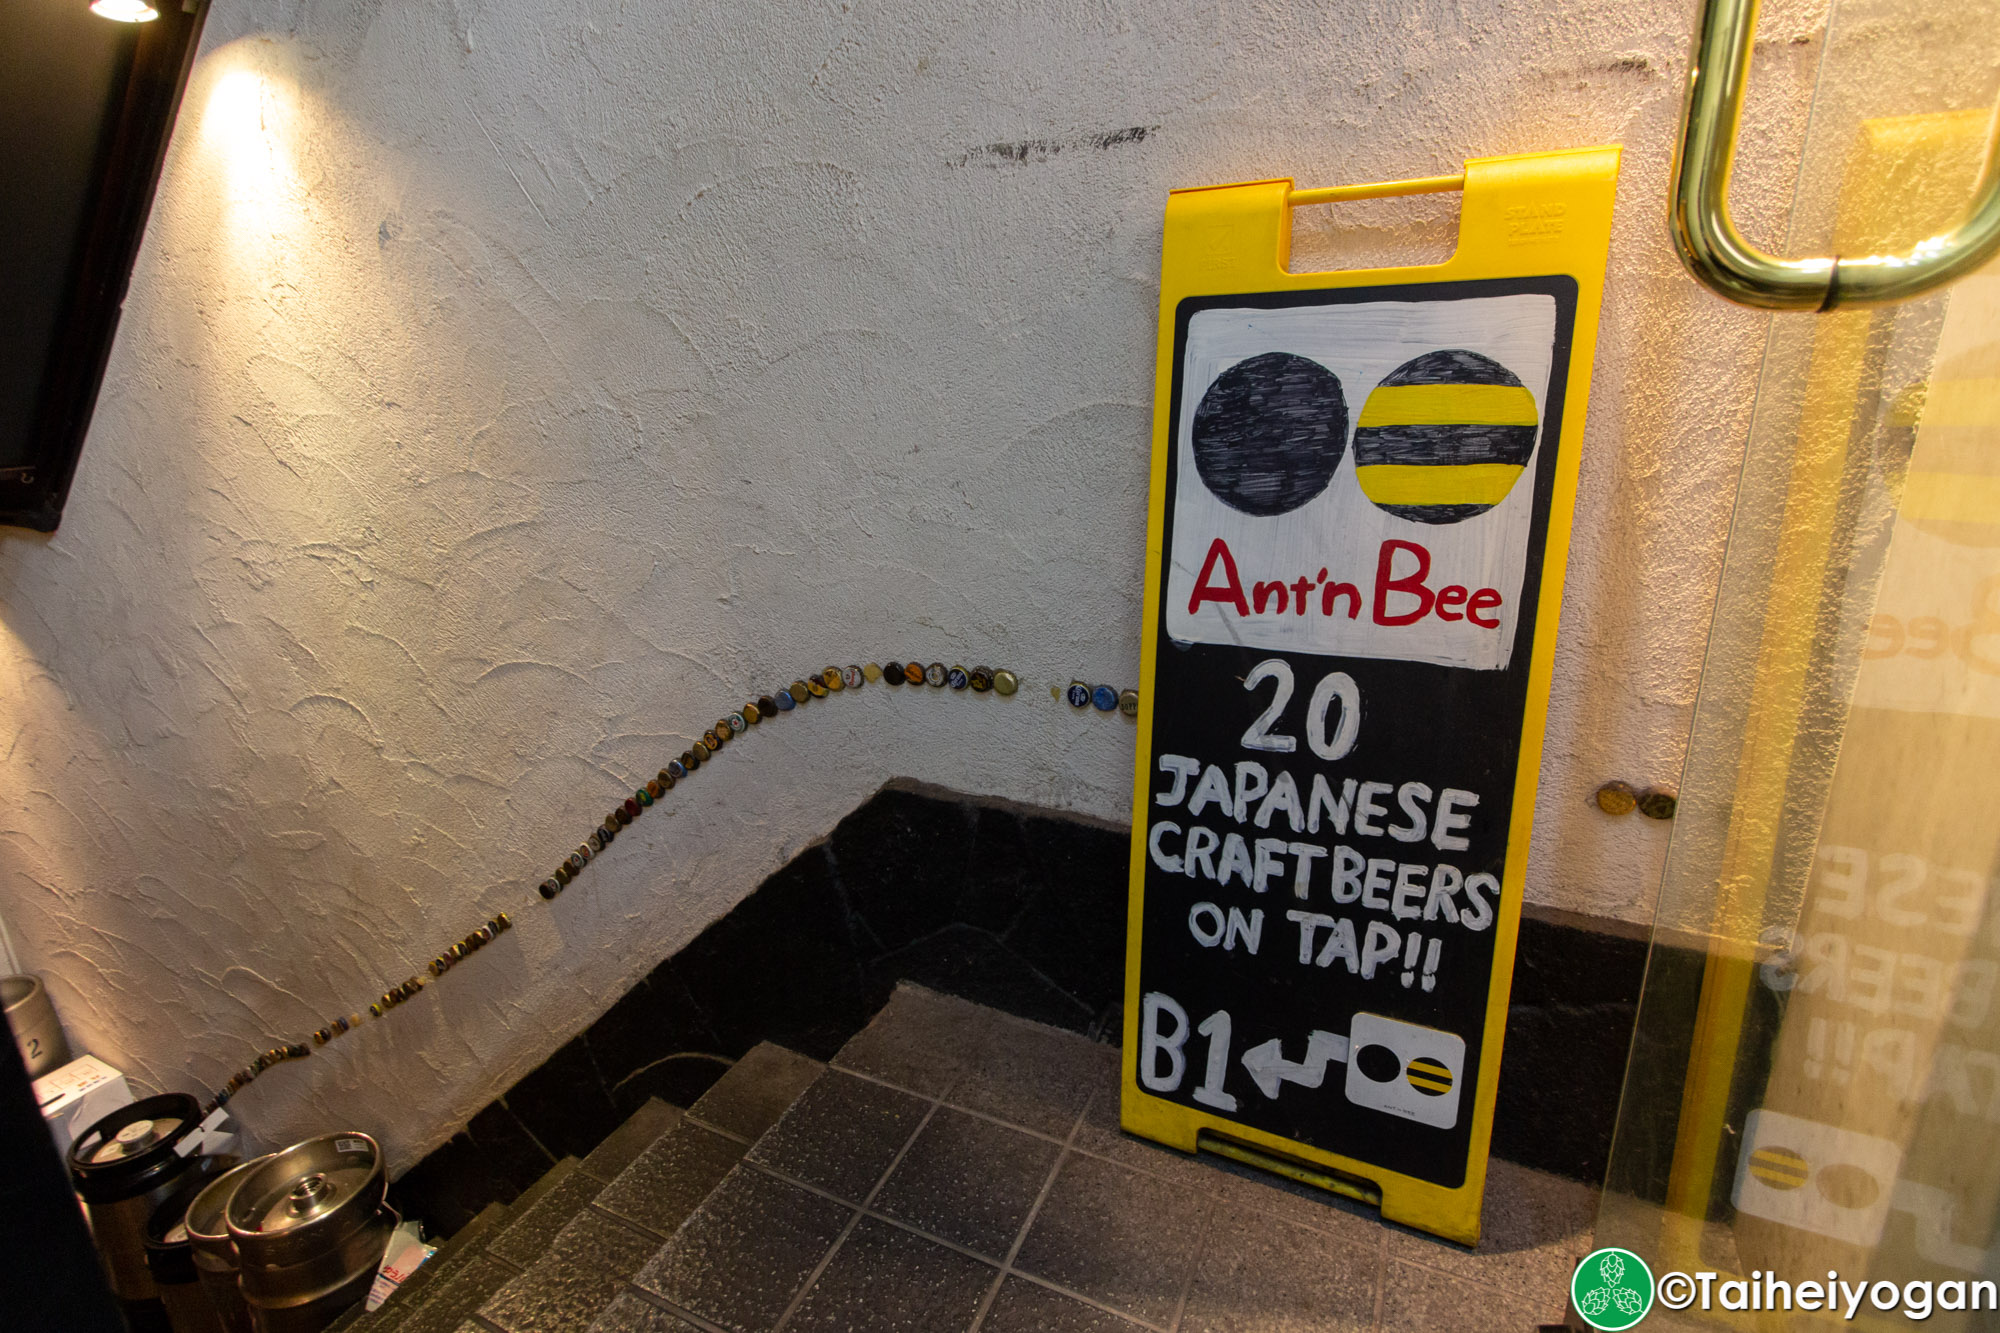 Ant 'n Bee (六本木本店・Roppongi) - Interior - Entrance